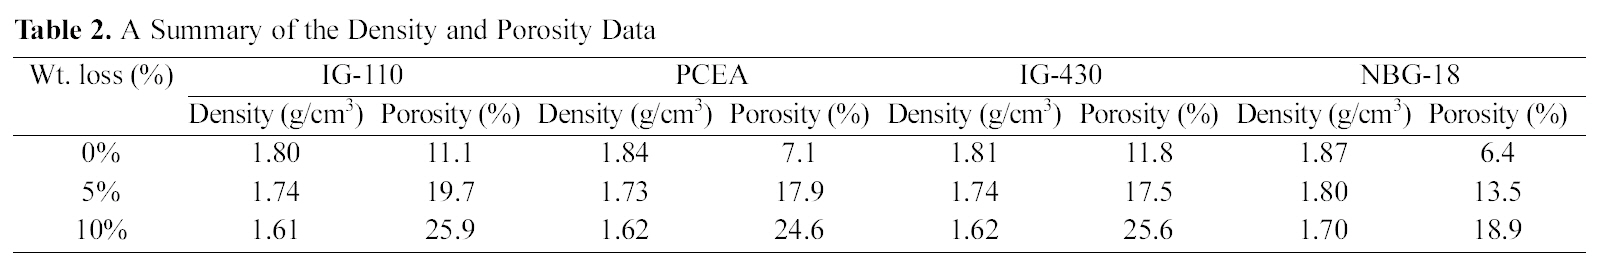 A Summary of the Density and Porosity Data